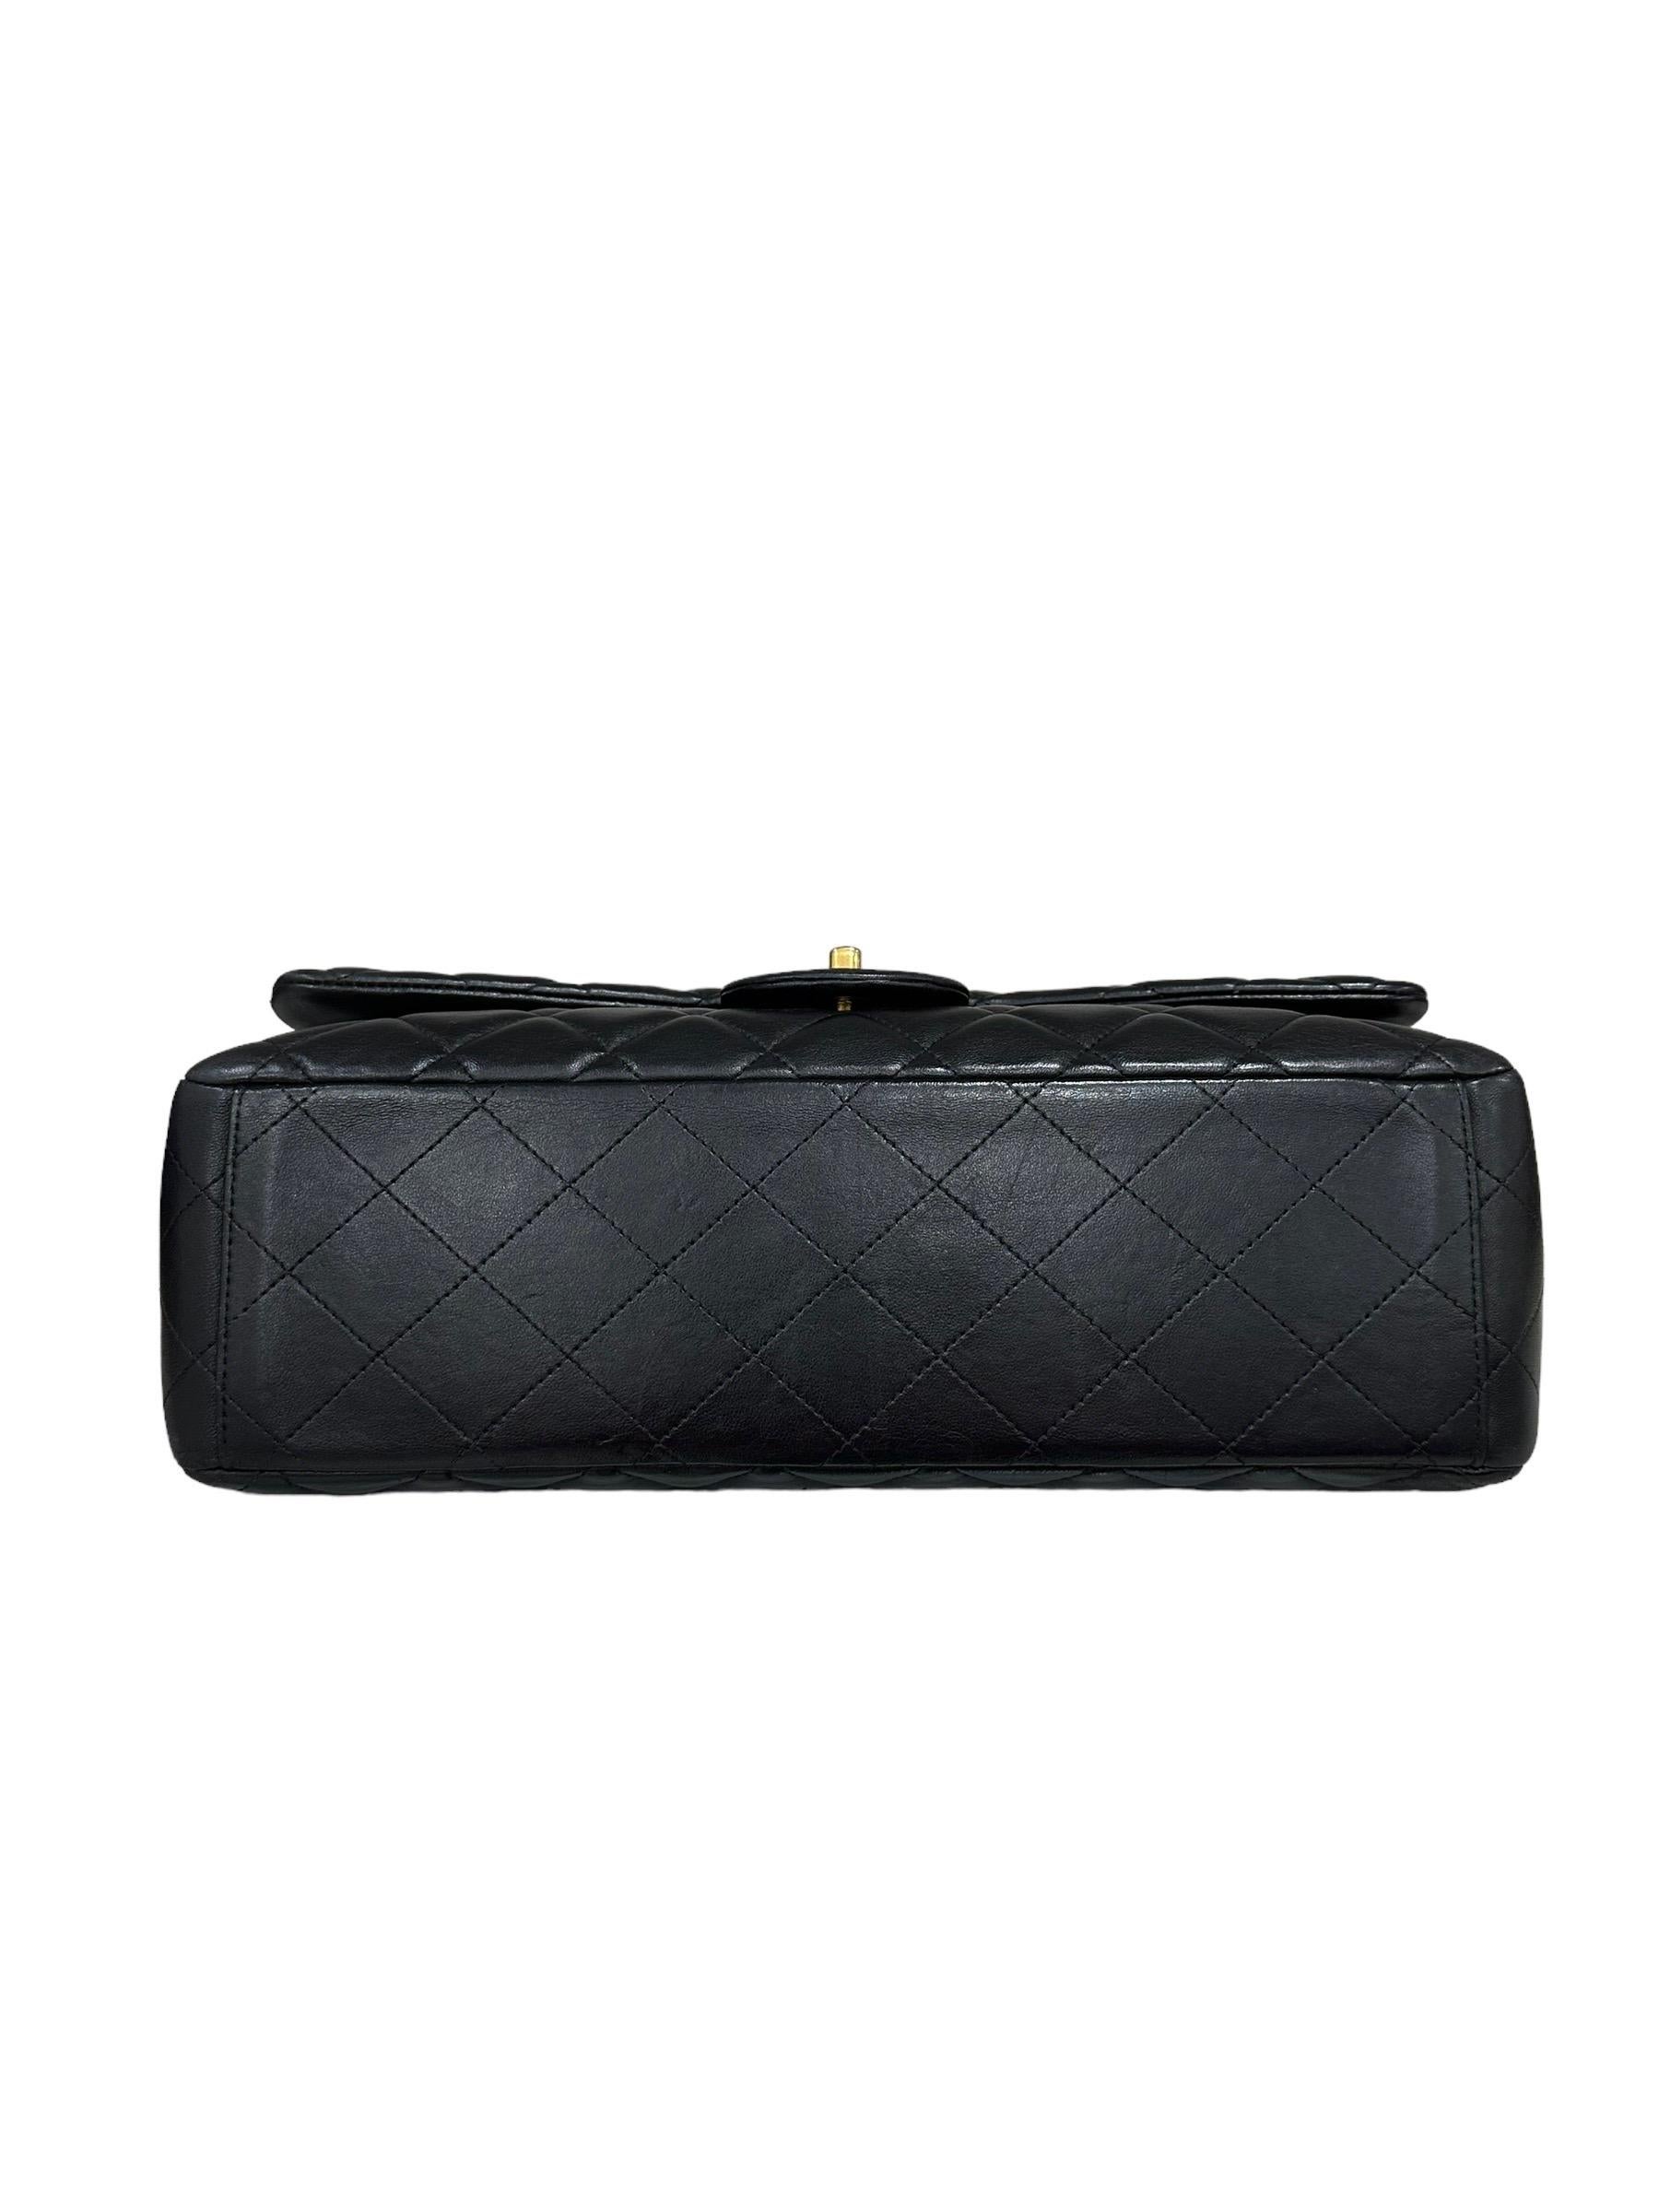 2011 Chanel Timeless Maxi Jumbo Black Leather Top Shoulder Bag For Sale 5